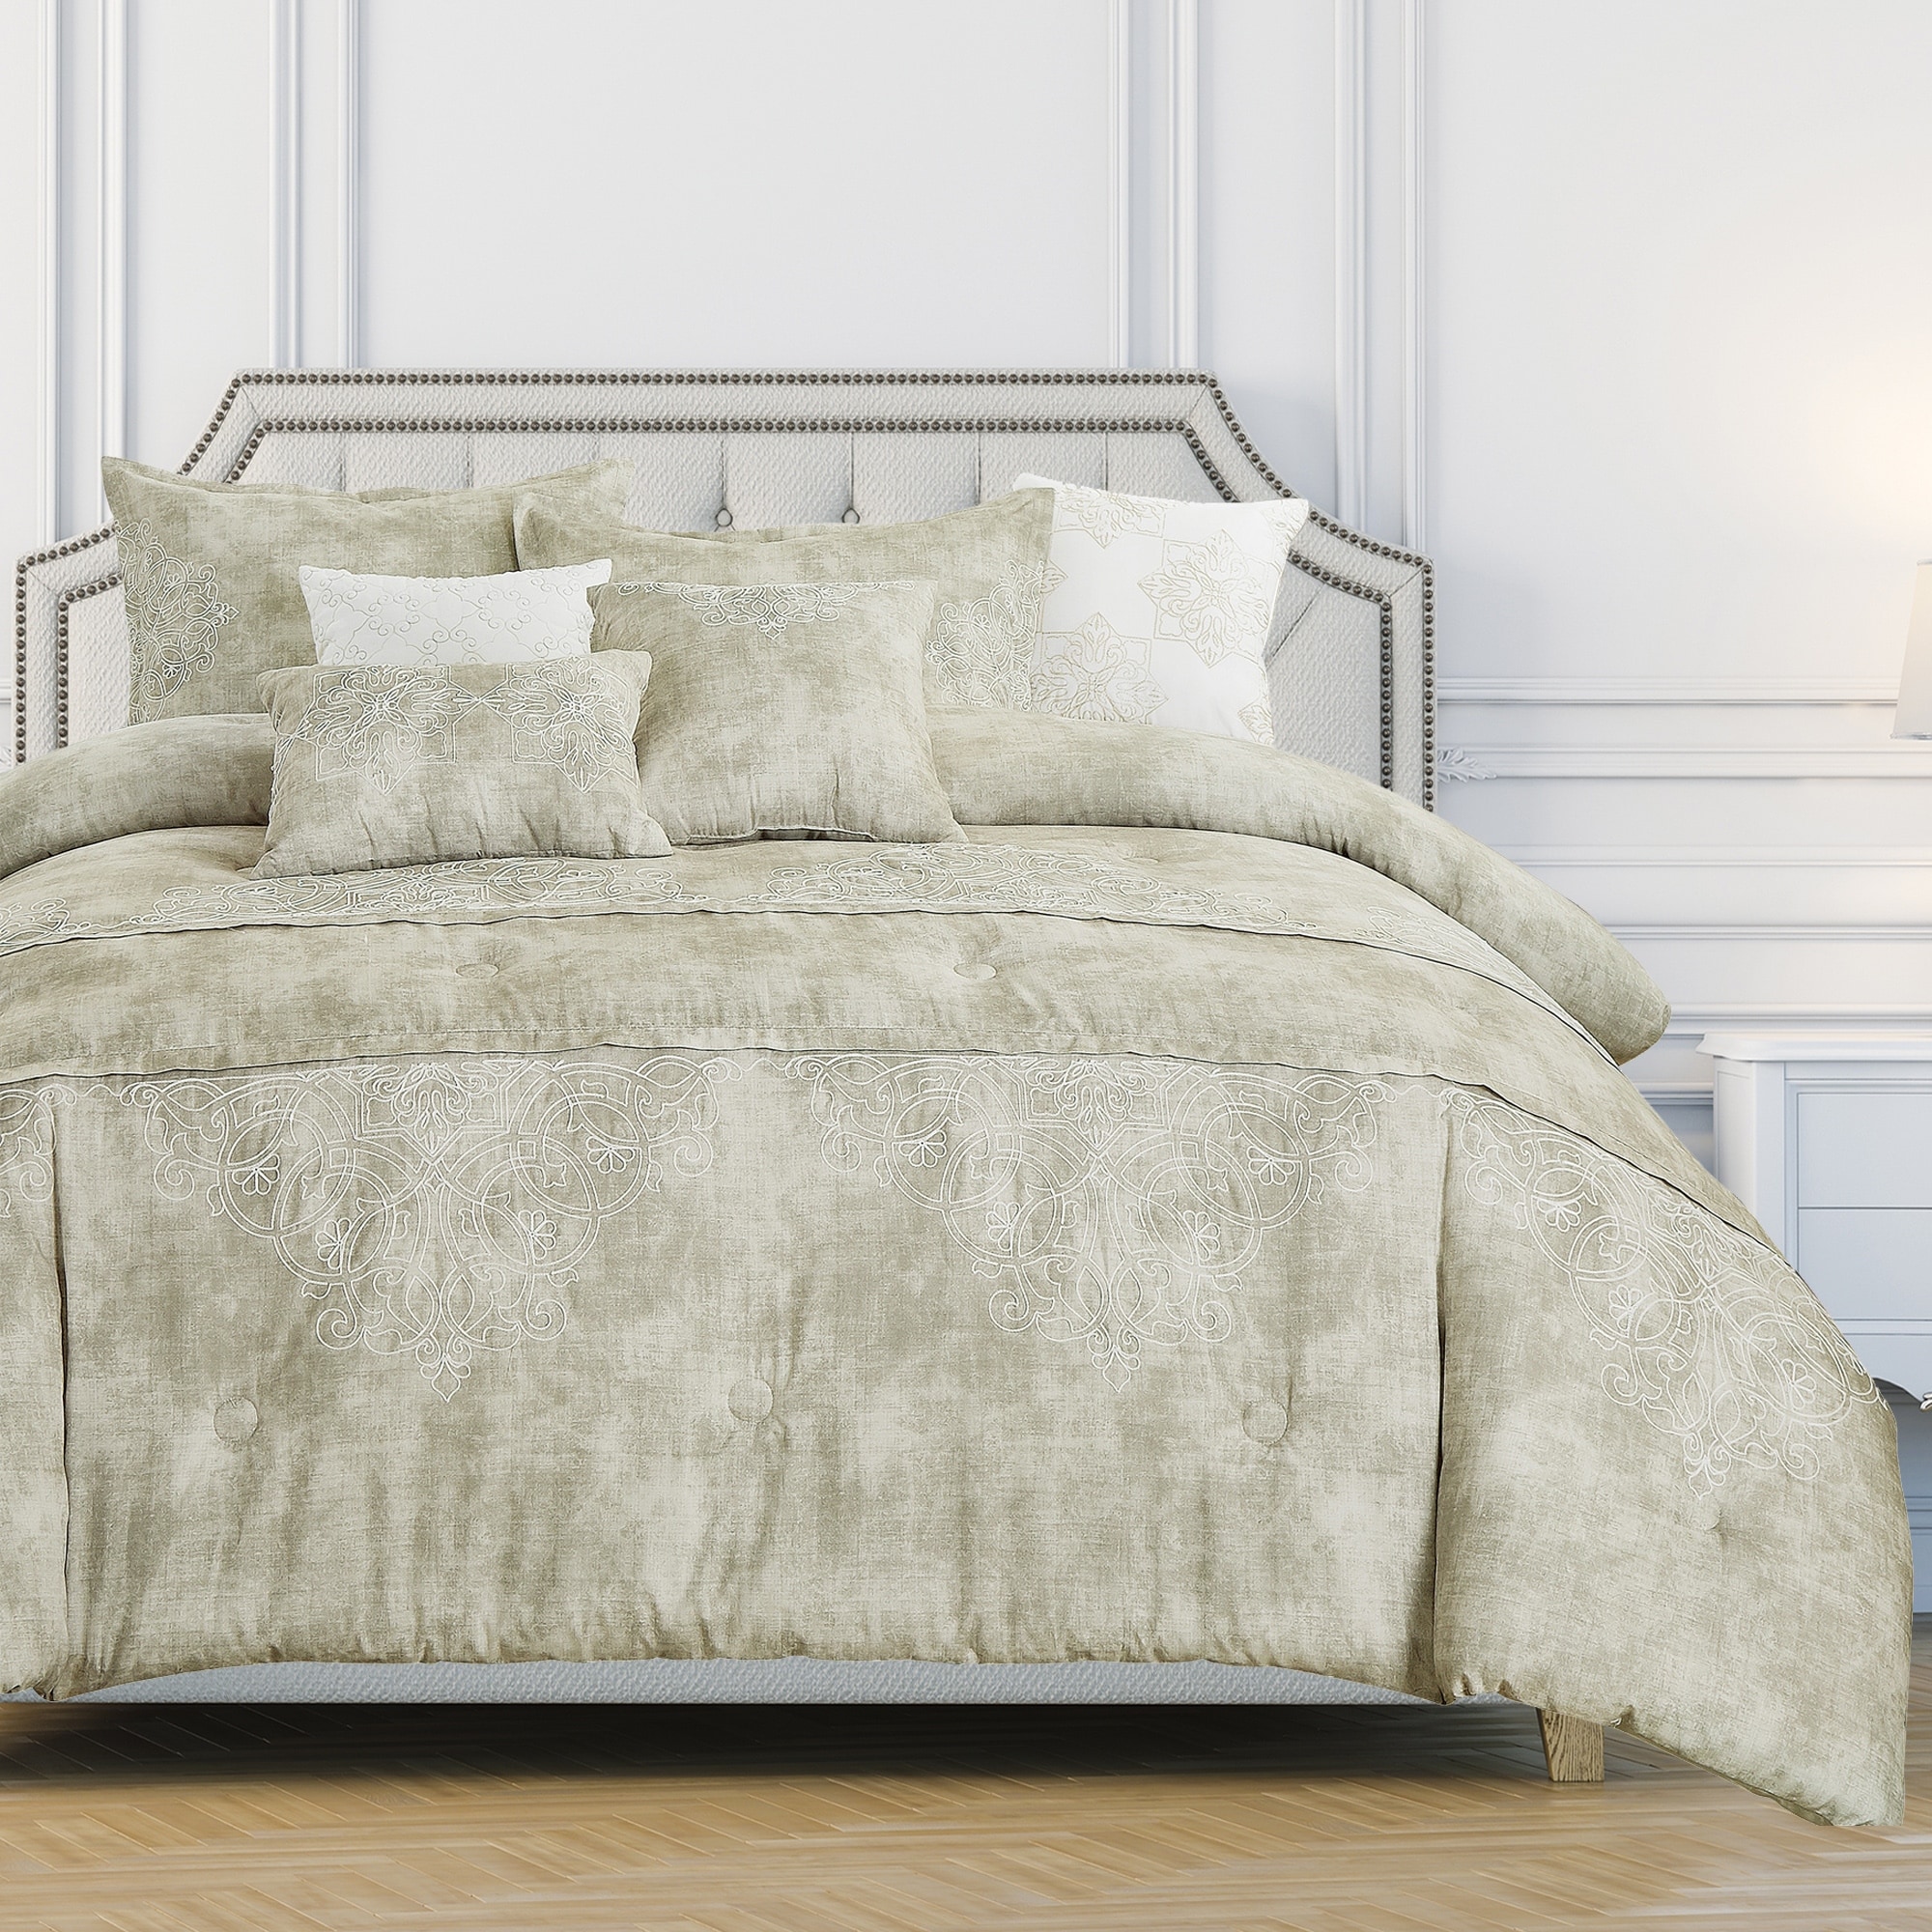 https://ak1.ostkcdn.com/images/products/is/images/direct/f675cee7e304b7e8de120f7aa4e73a9c2e771657/Wellco-Bedding-Comforter-Set-Bed-In-A-Bag---7-Piece-Luxury-Hiroya-microfiber-Bedding-Sets---Oversized-Bedroom-Comforters.jpg